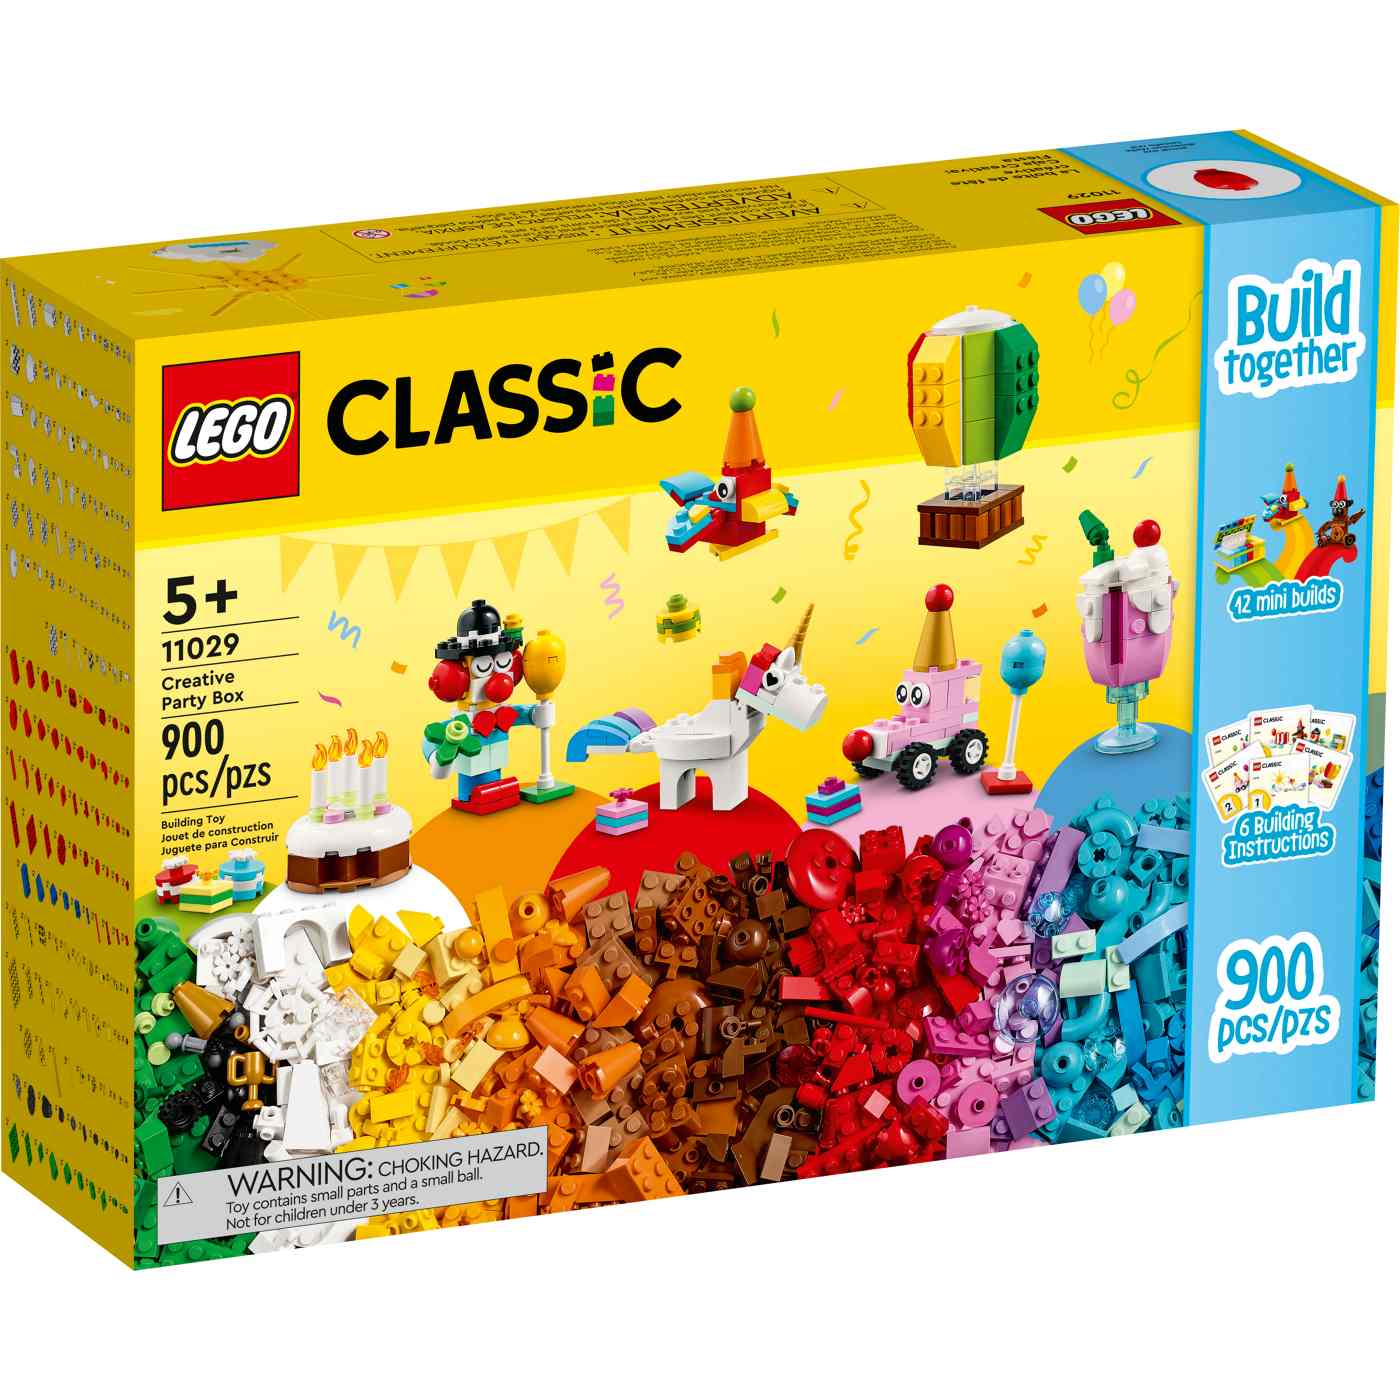 LEGO Classic Creative Party Box Set; image 2 of 2